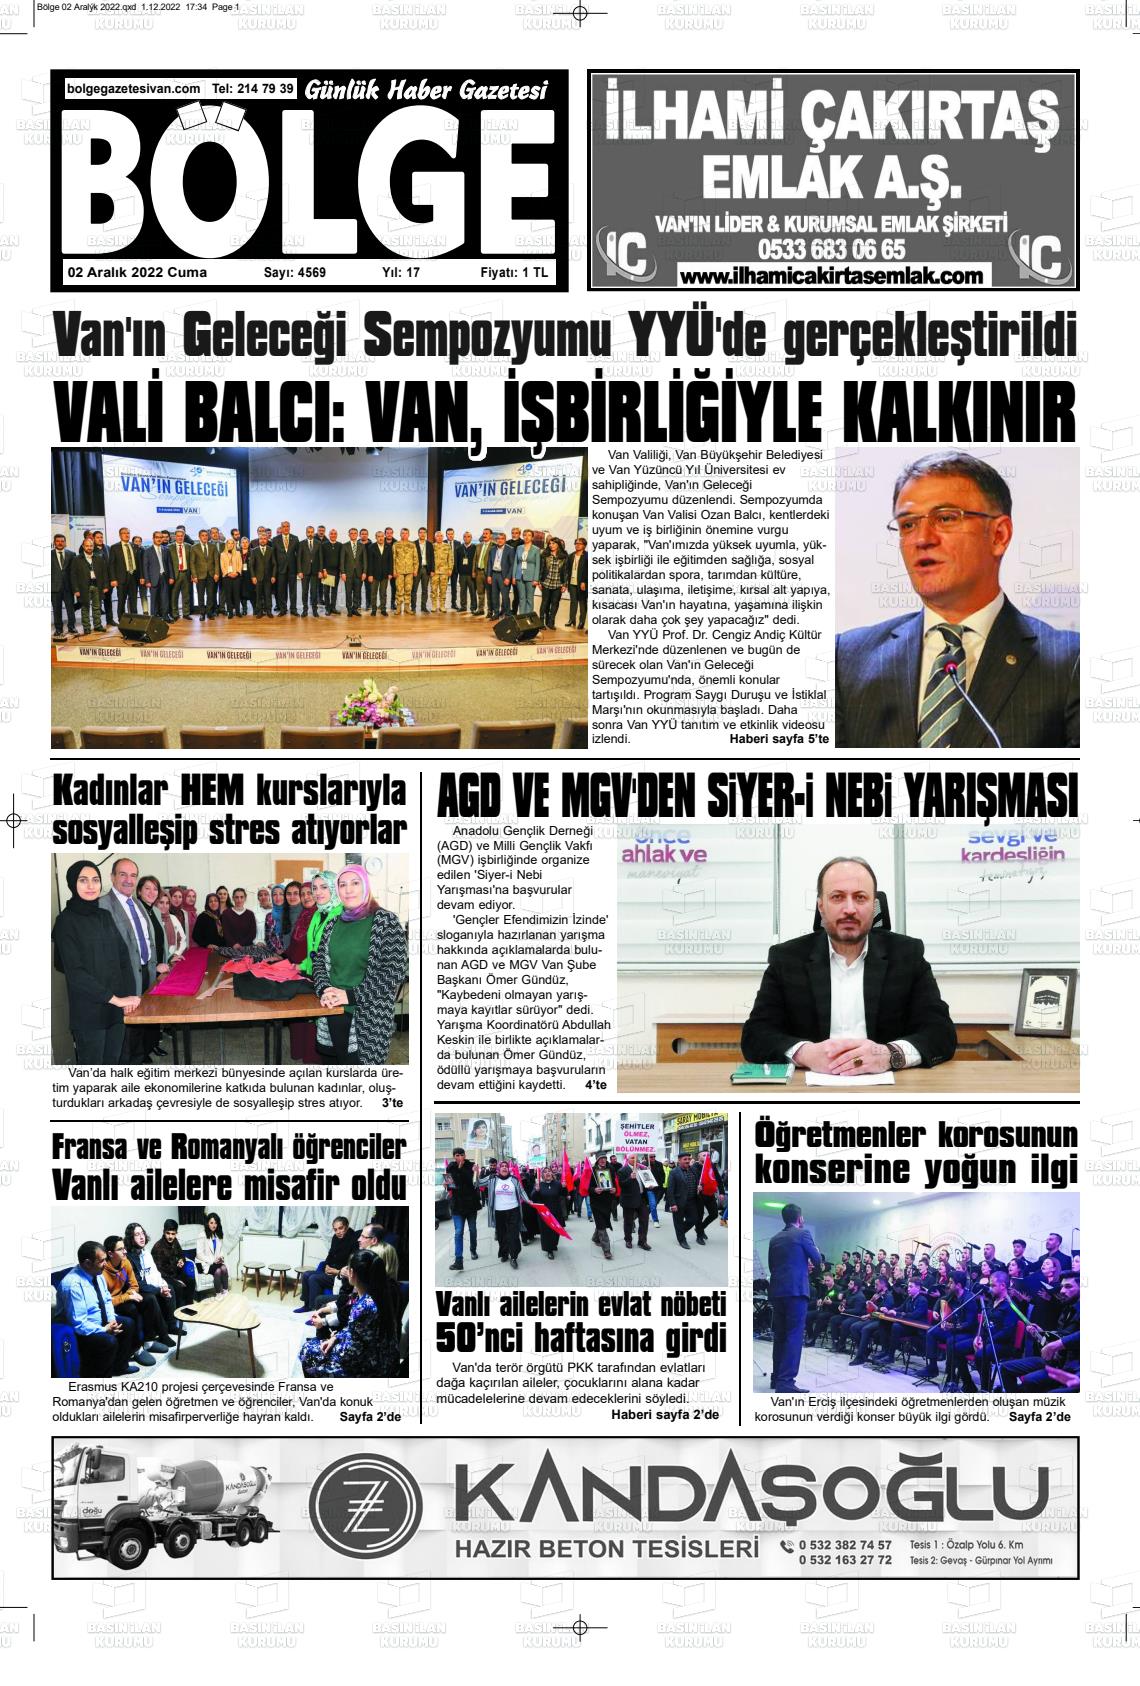 02 Aralık 2022 Bölge  Silvan Gazete Manşeti